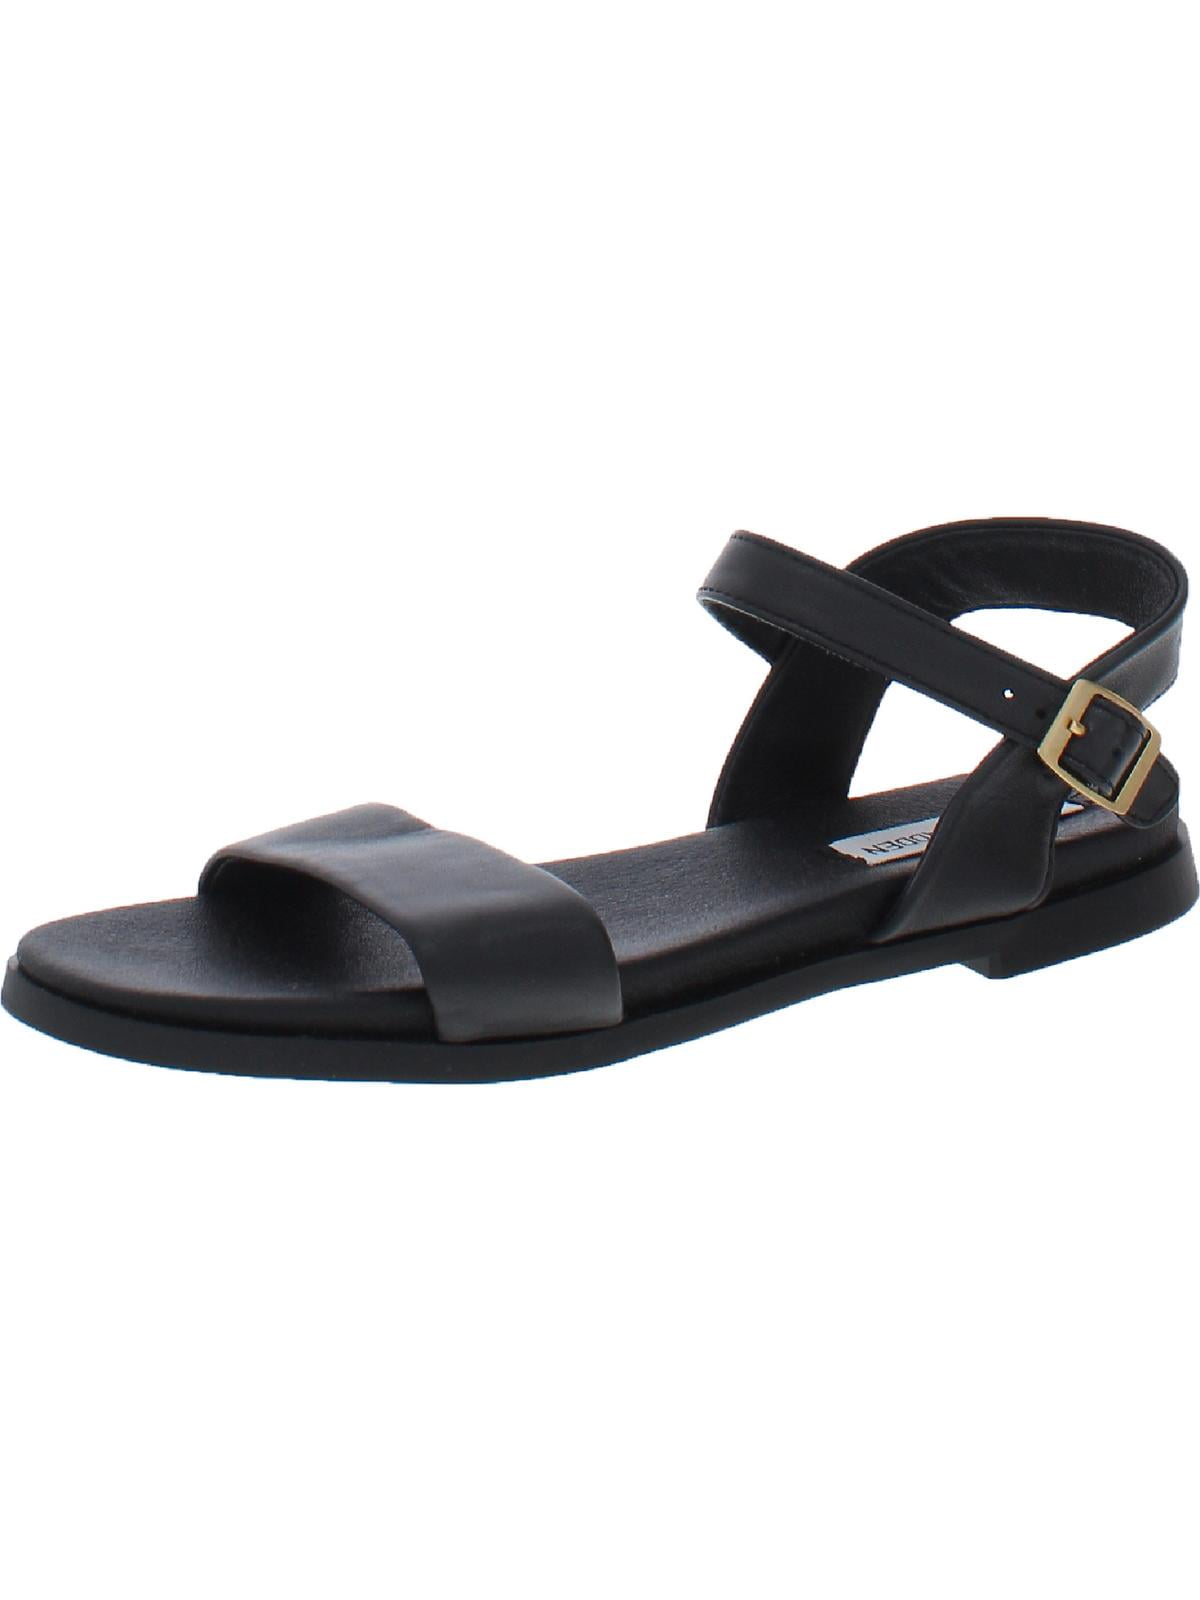 Steve Madden Womens Dina Leather Ankle Flat Sandals - Walmart.com